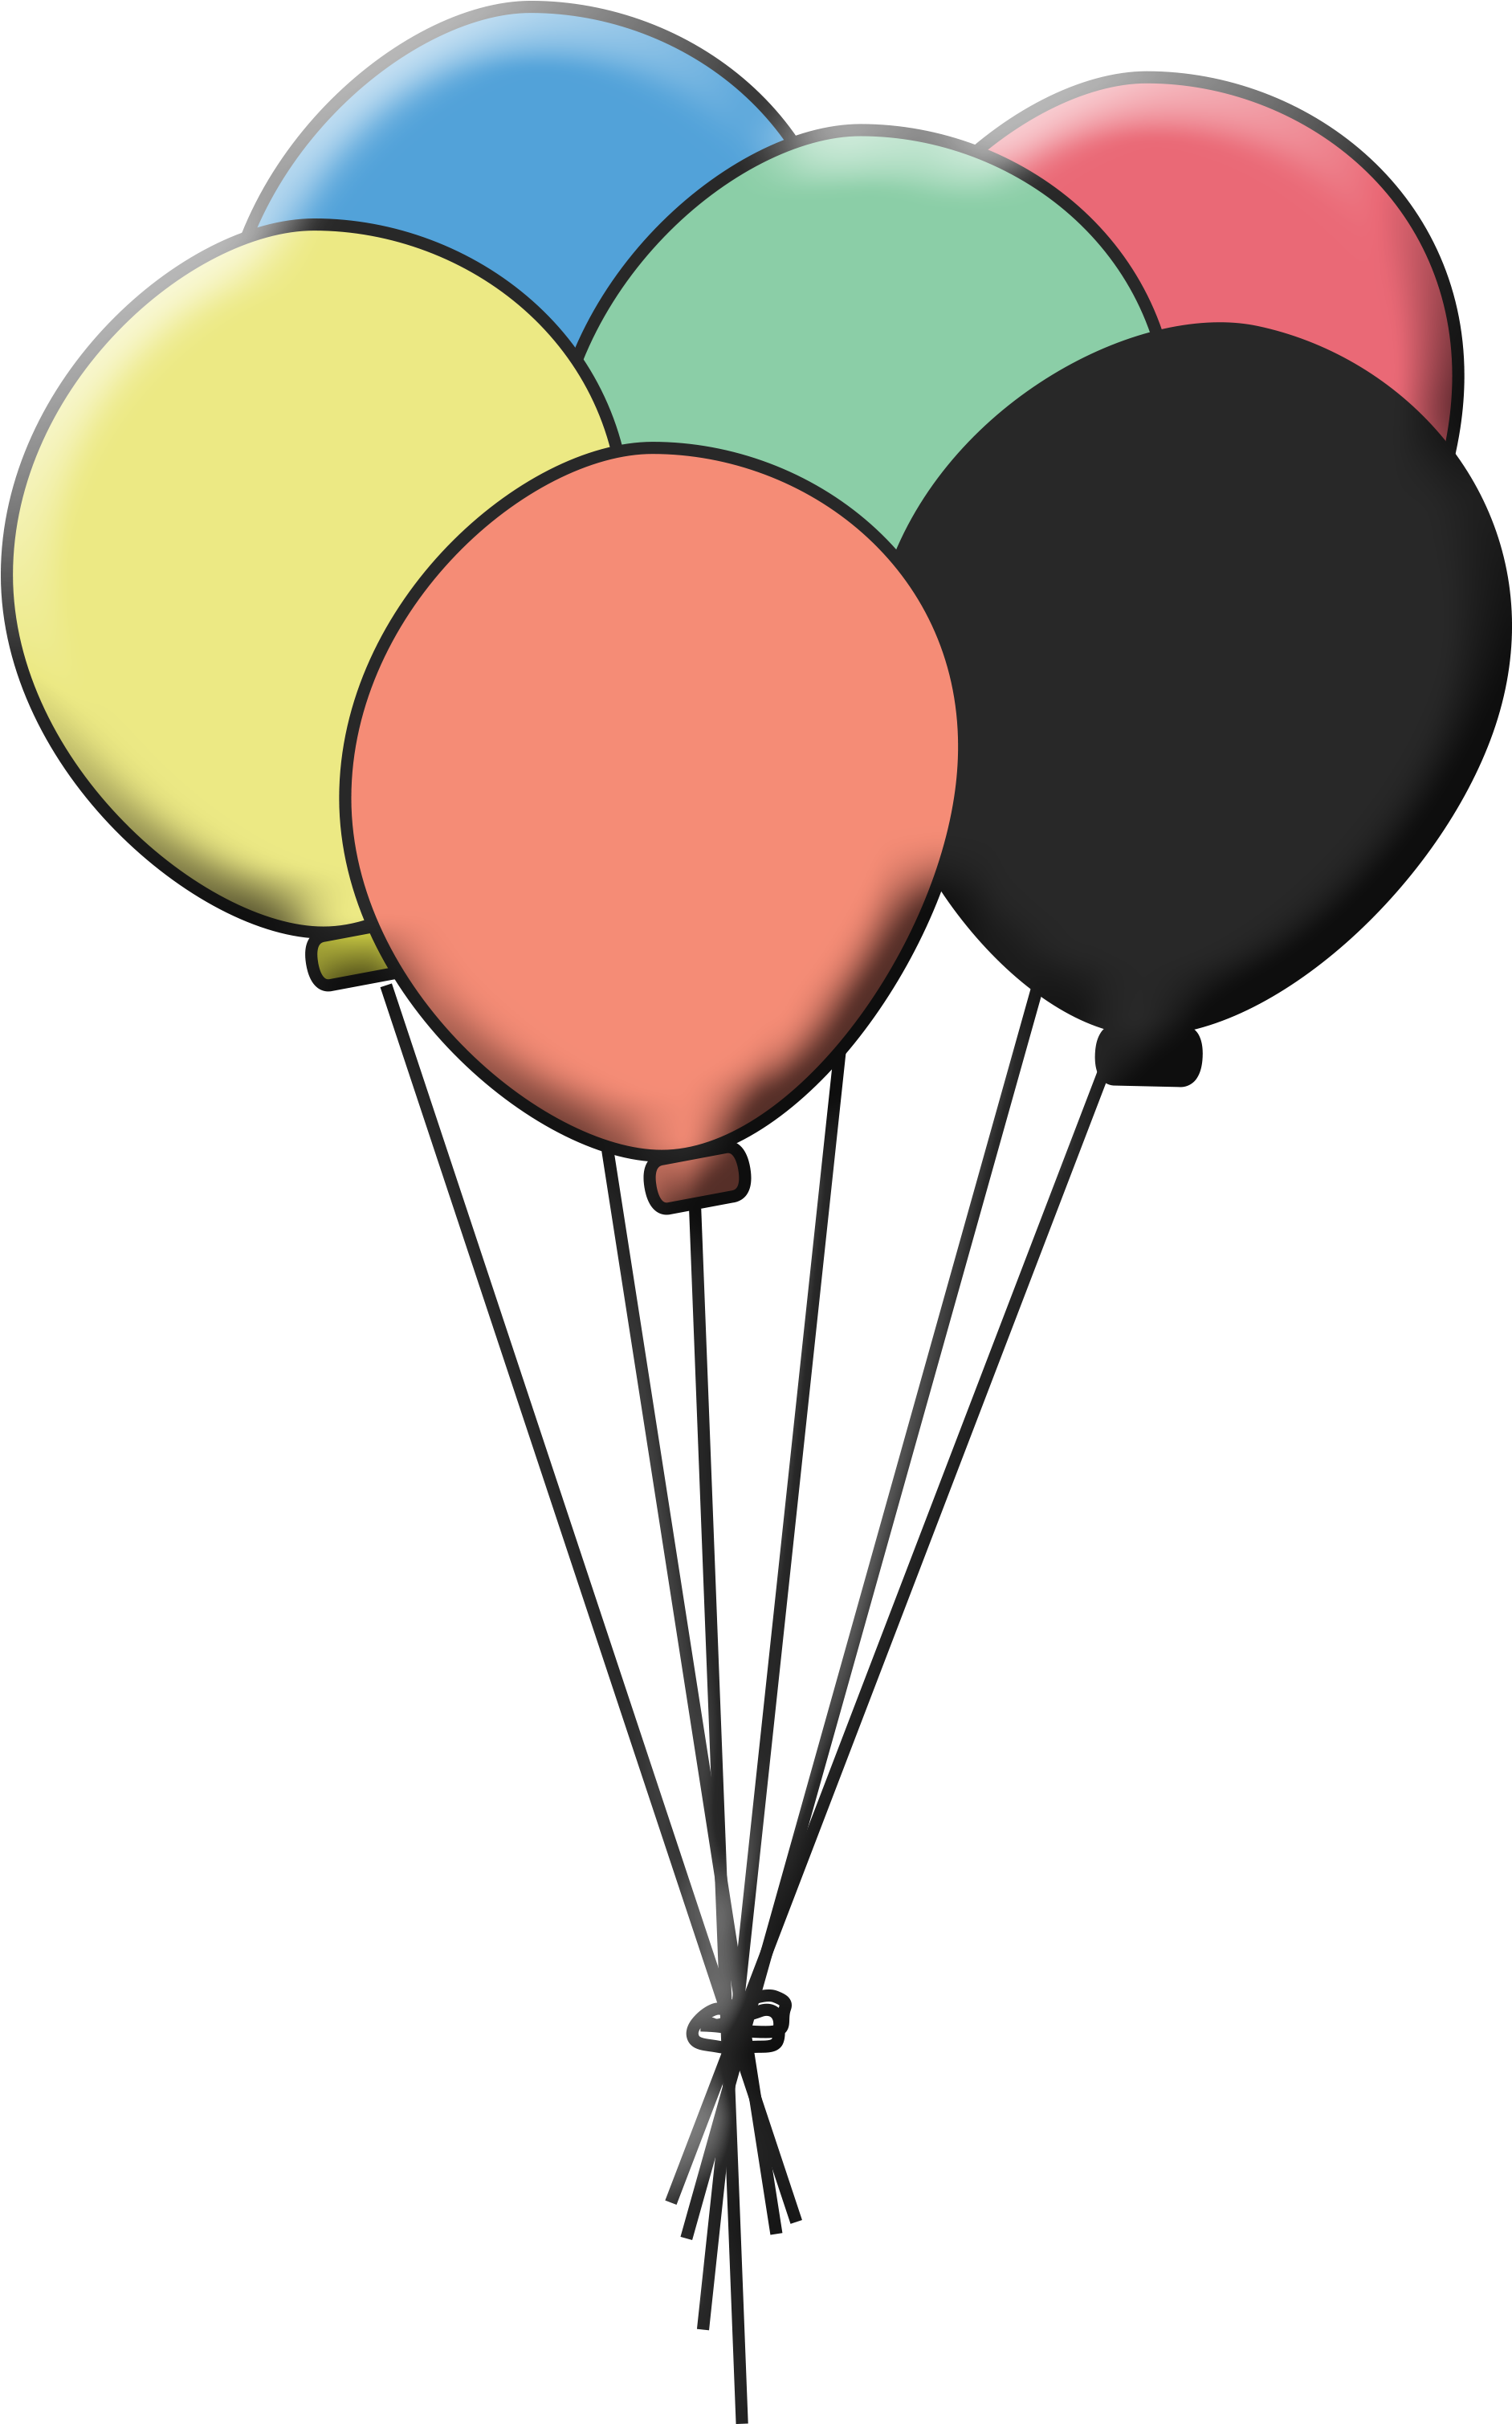 Balloon Creativity Clip Art - Balloon Creativity Clip Art (2152x3600)